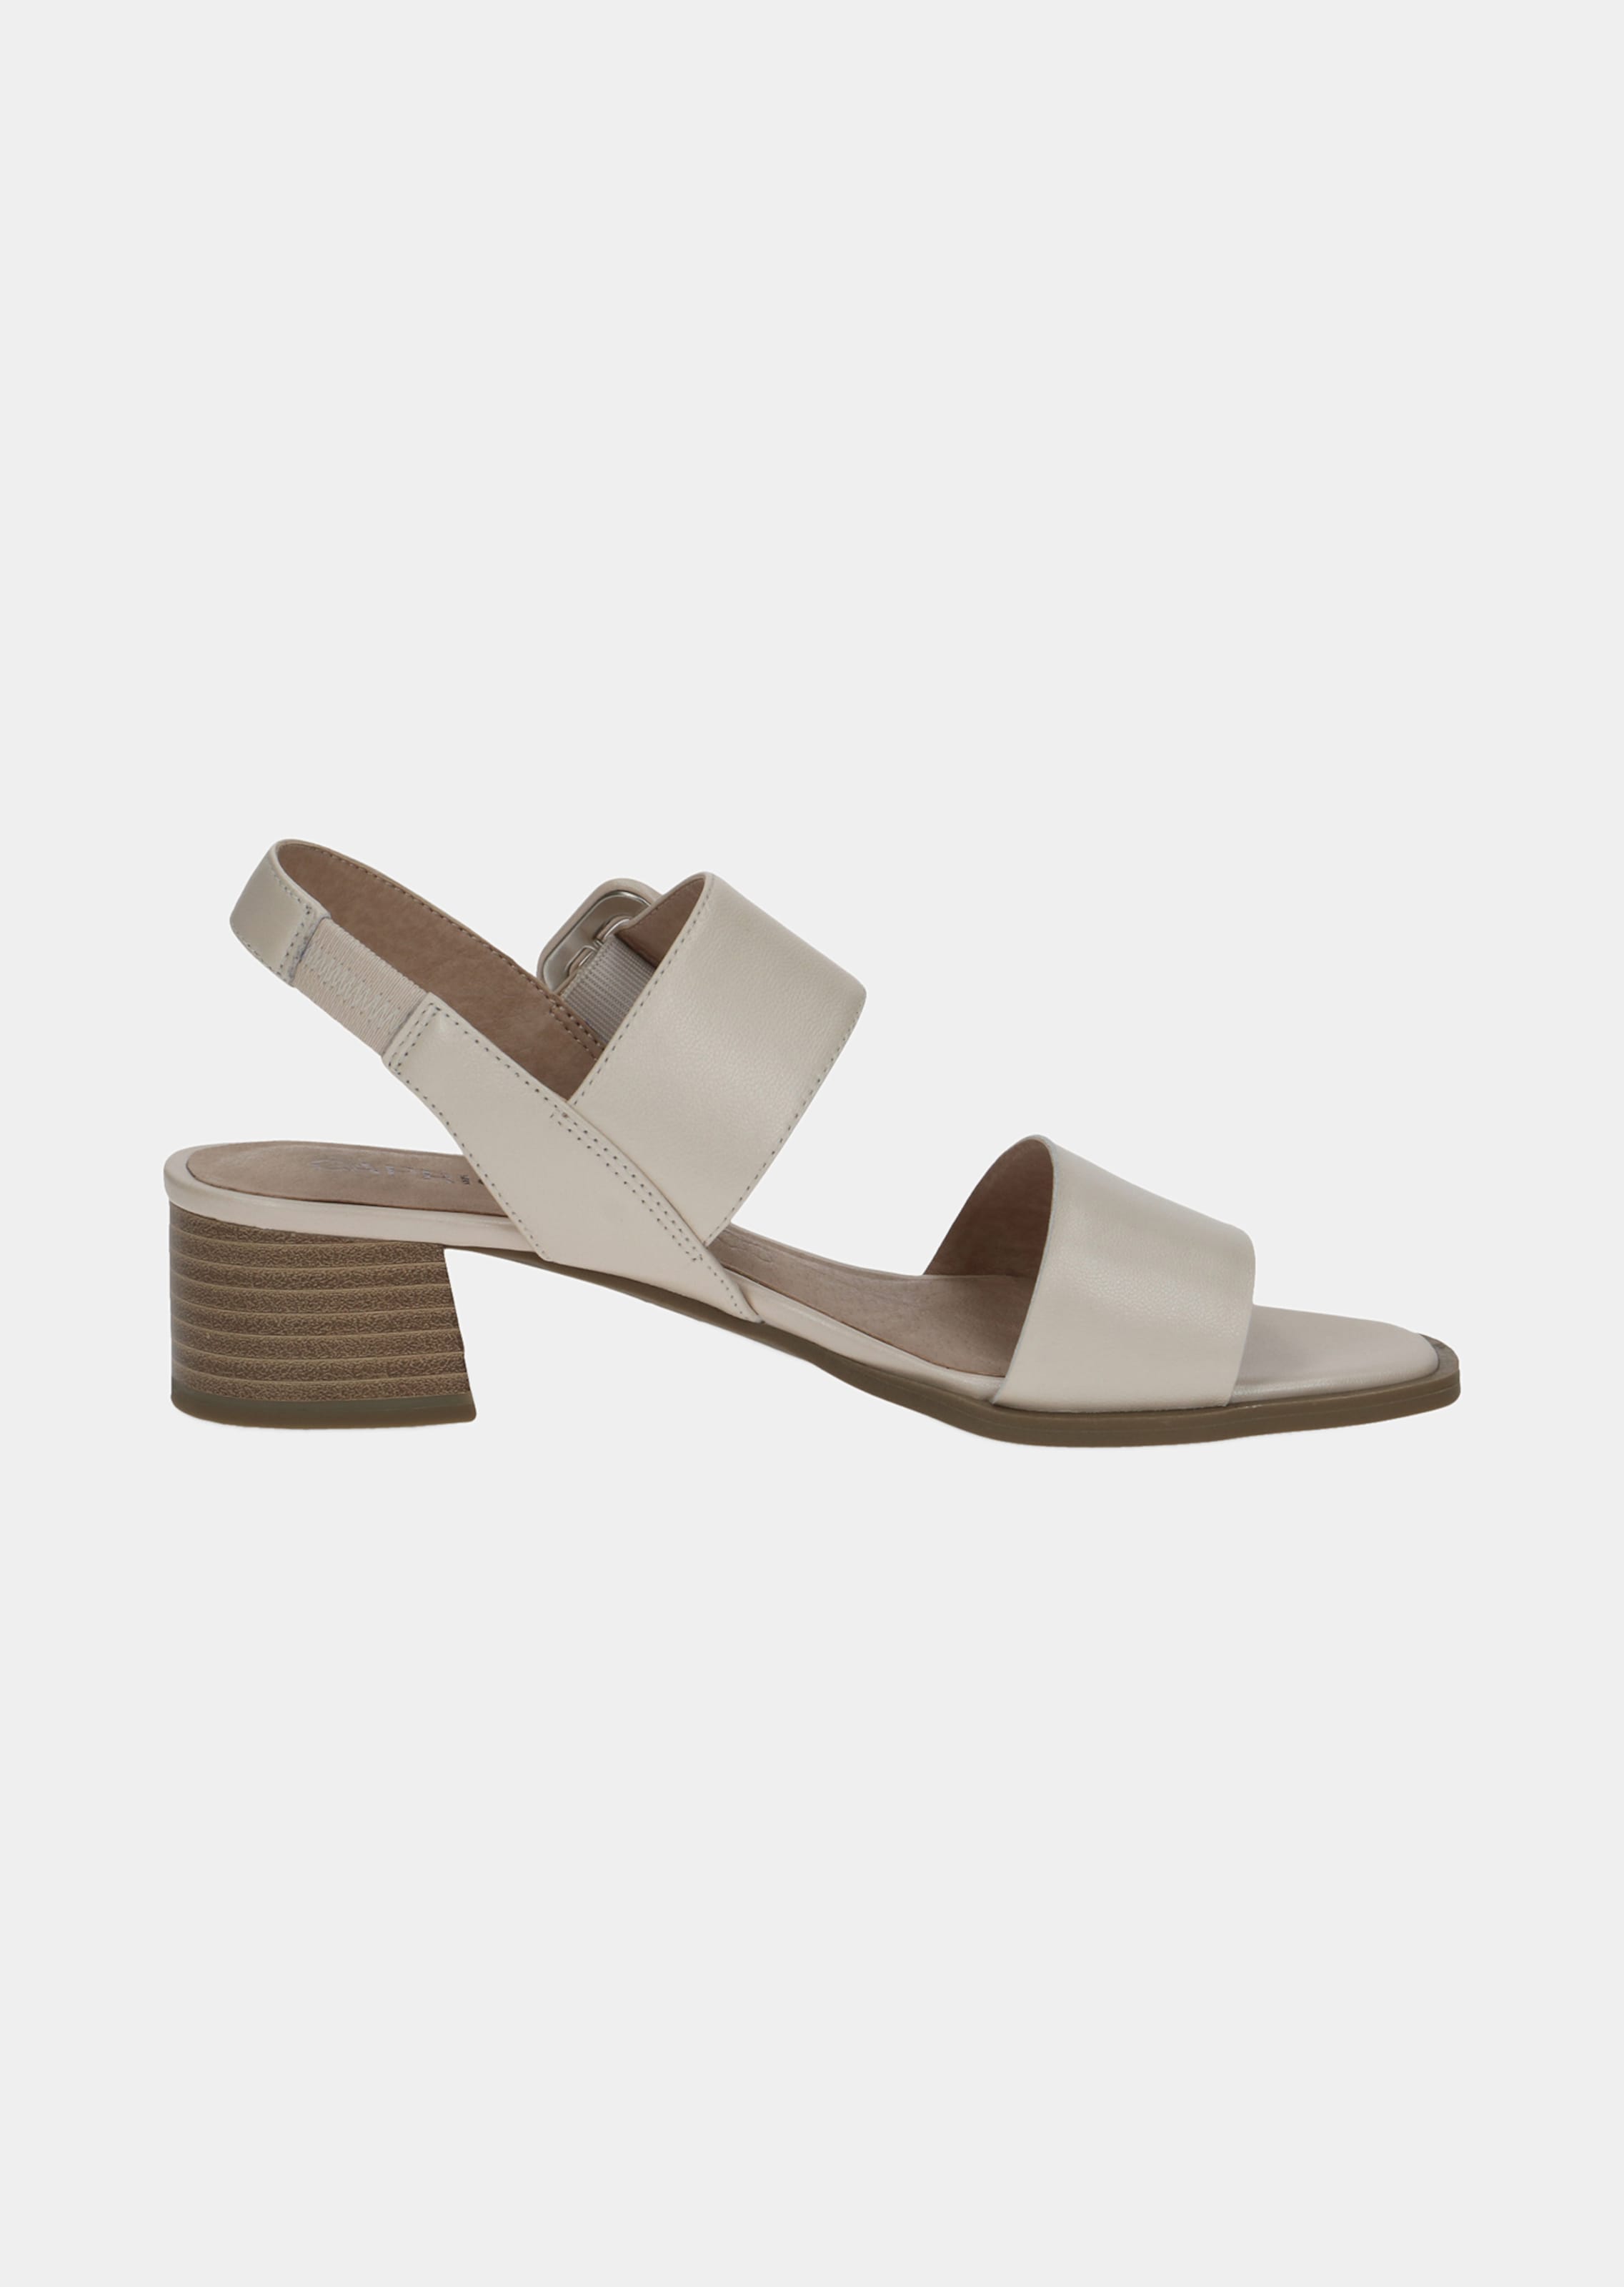 Sandaletten - crème - Gr. 40 de Goldner Fashion